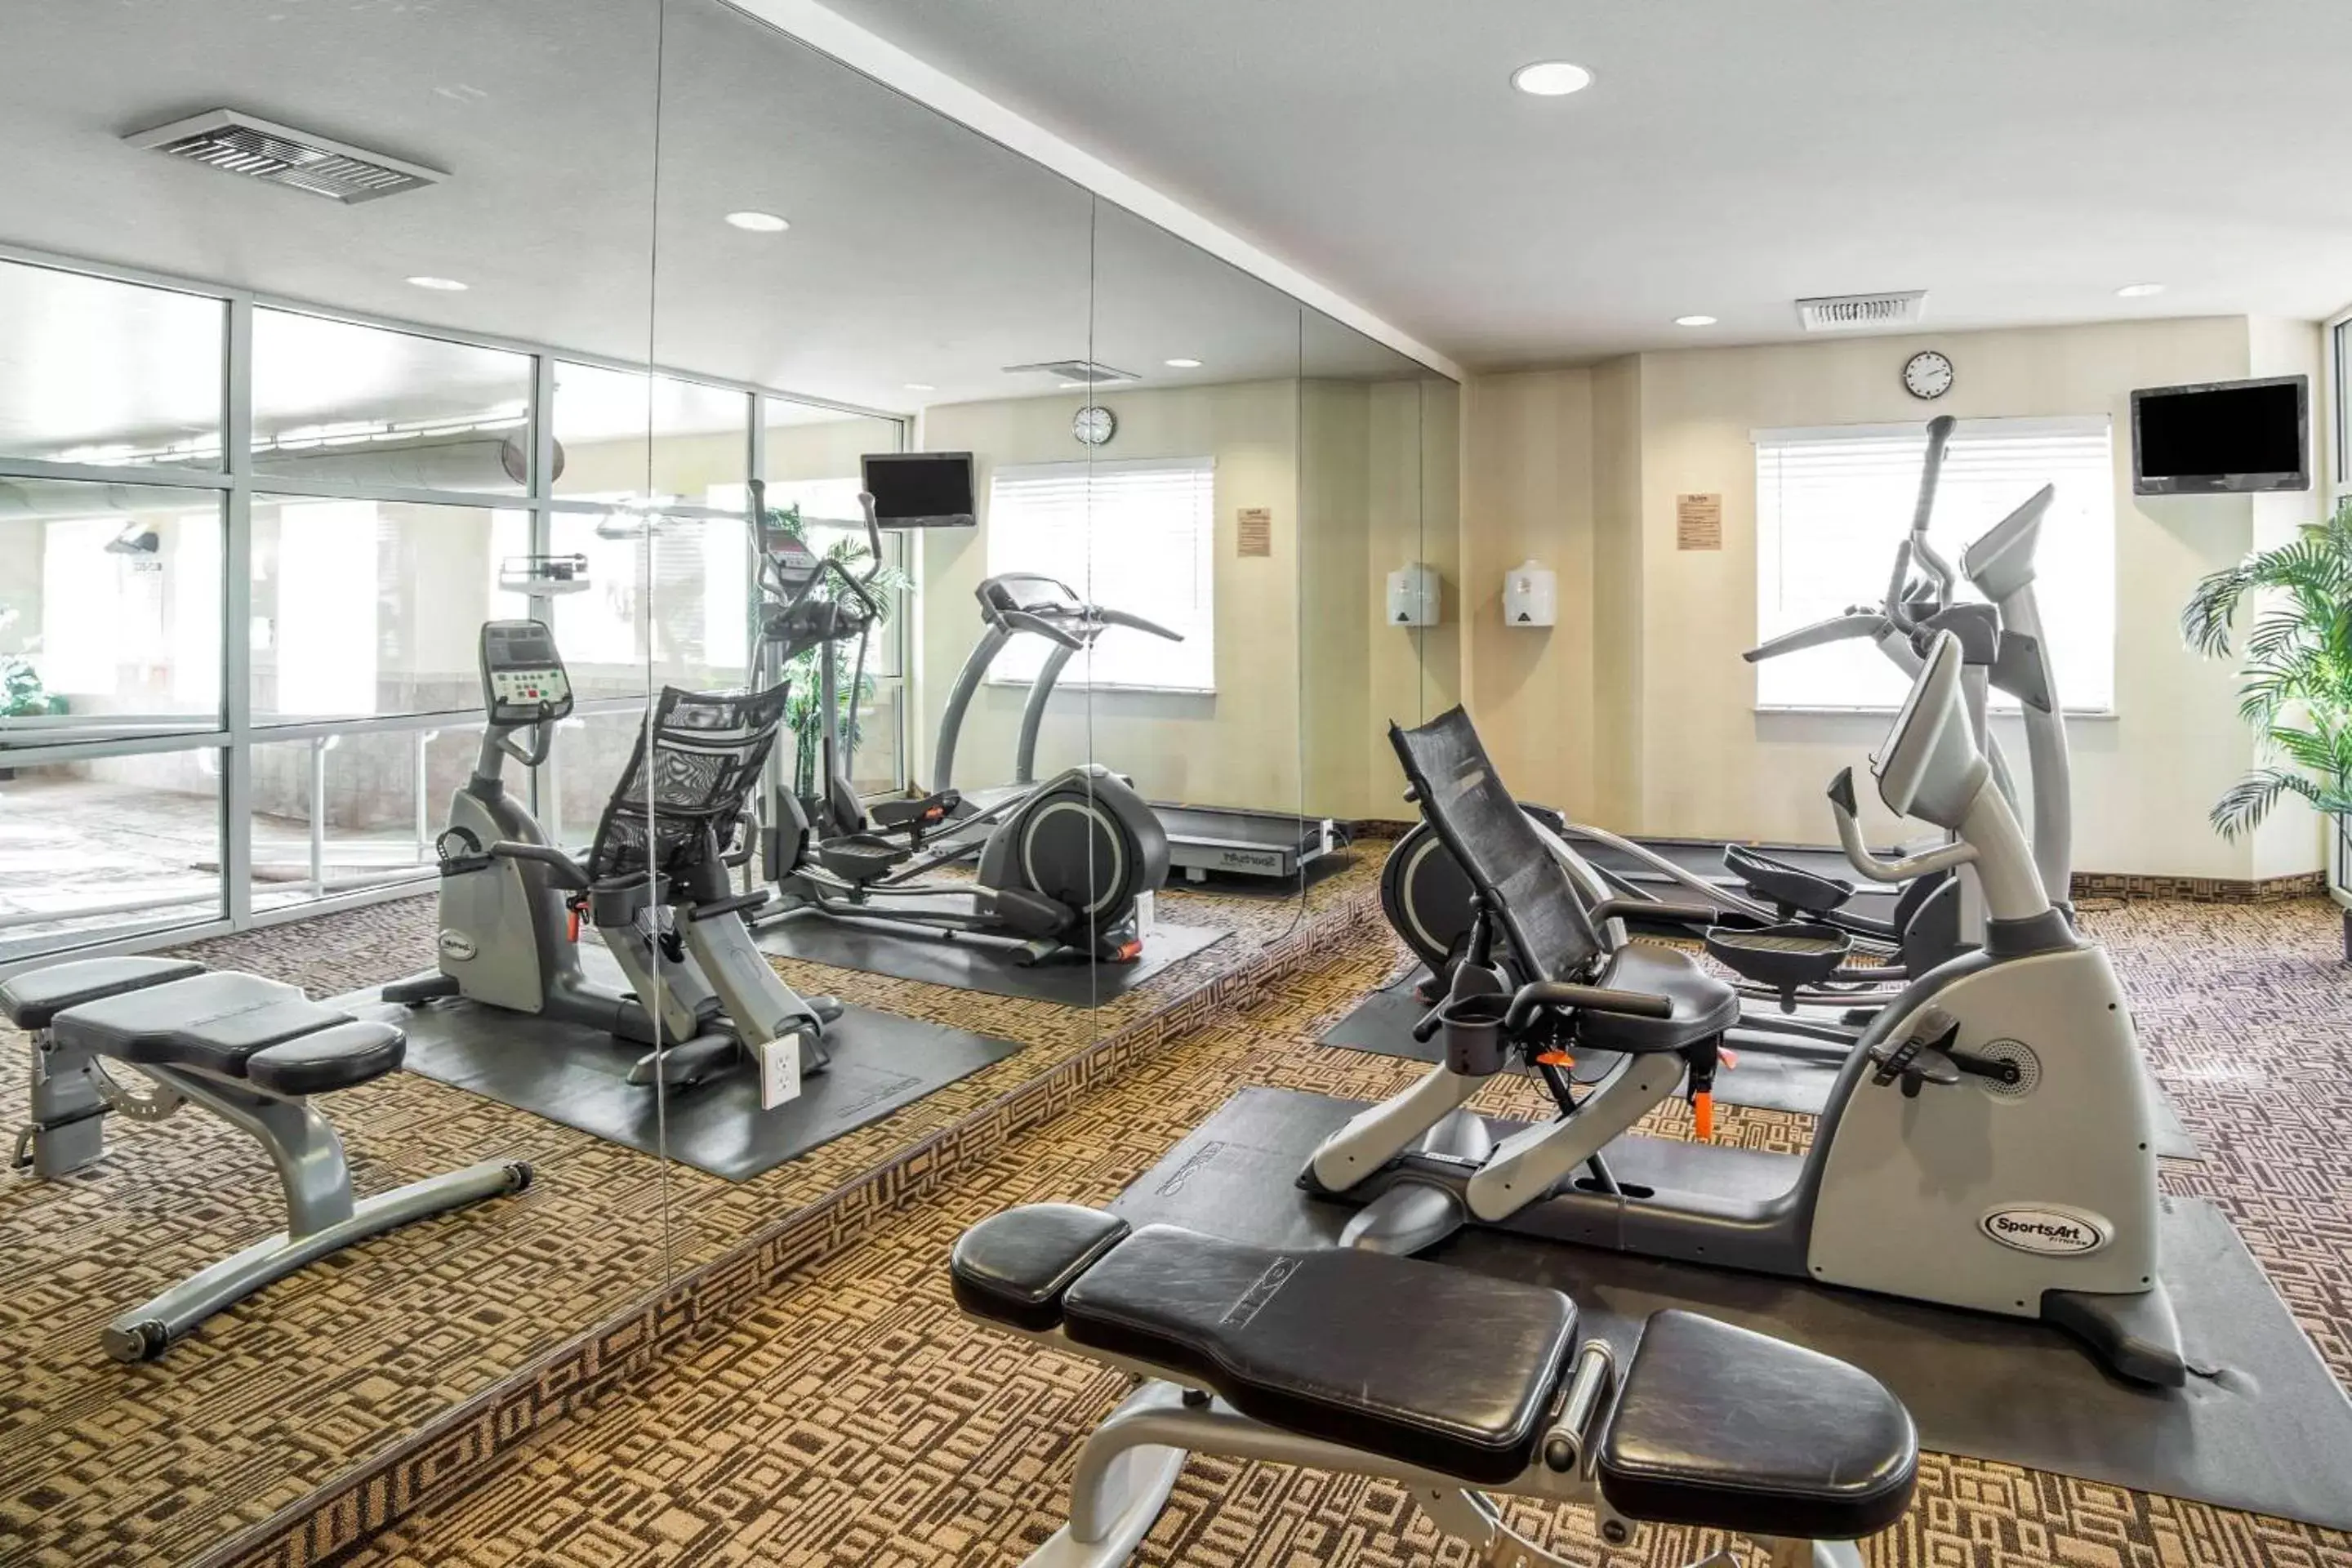 Fitness centre/facilities, Fitness Center/Facilities in Sleep Inn Provo near University